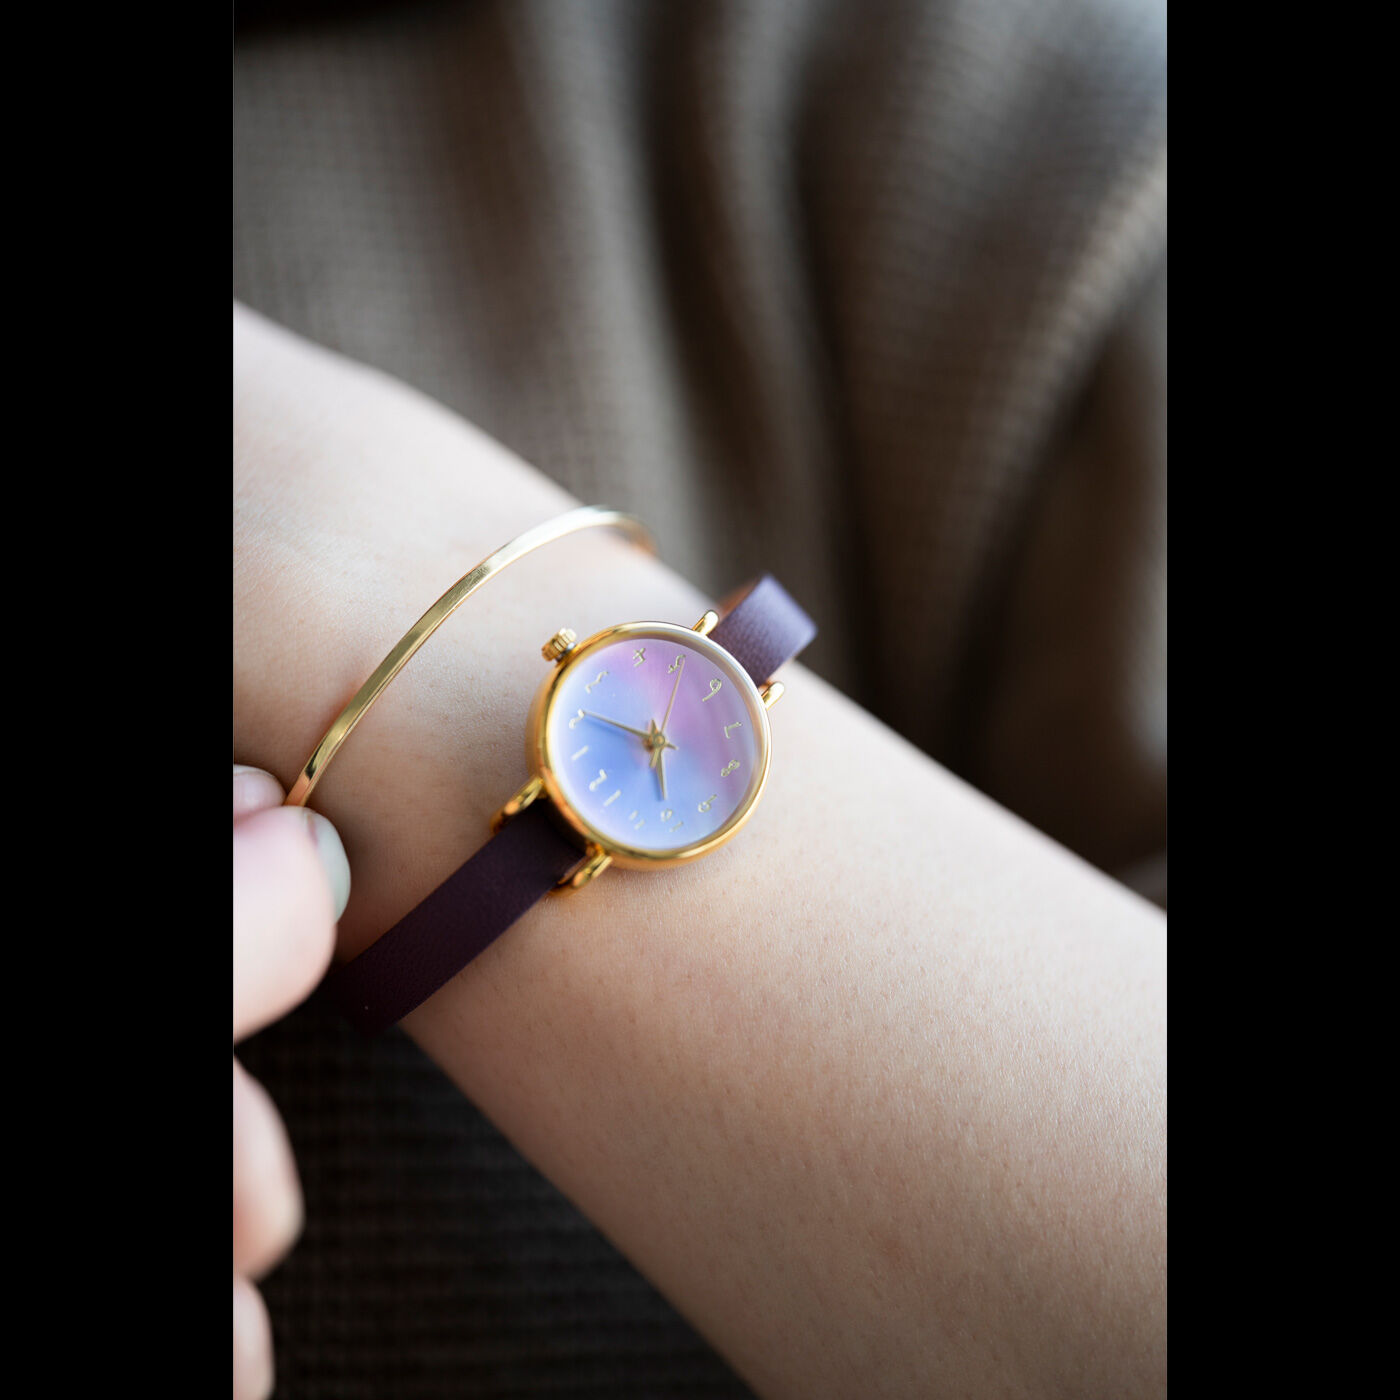 ＆Stories|金沢の時計職人が手掛けた　朝焼けに見惚れる腕時計〈マルベリーパープル〉|手首を飾る涼しげな存在感は、夏の装いにもぴったり。